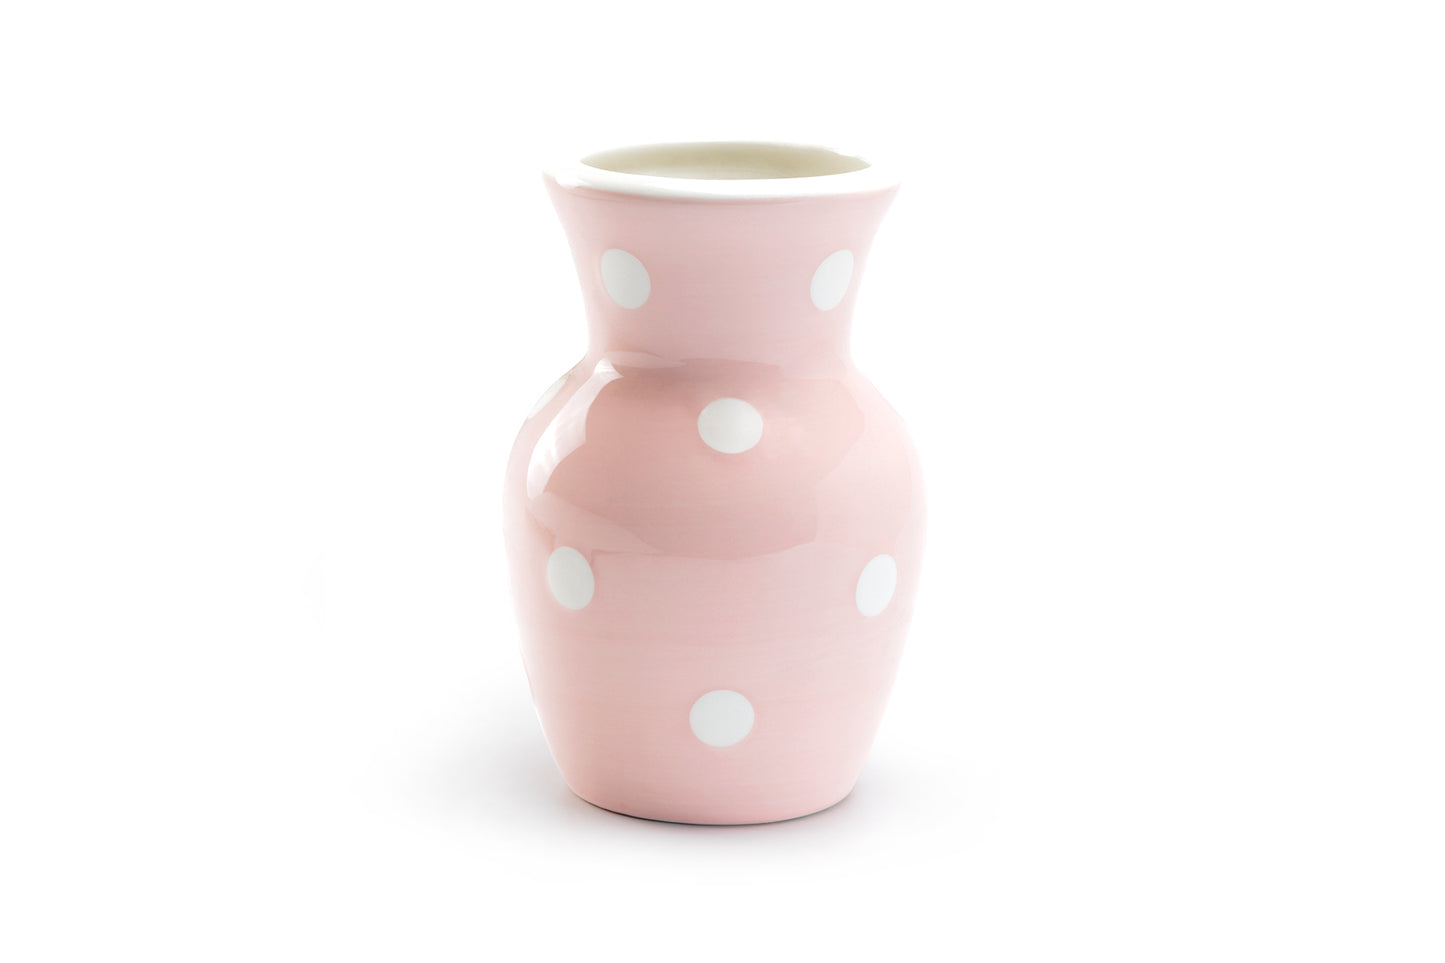 Terramoto Ceramic Polka Dots Vase - White on Pink